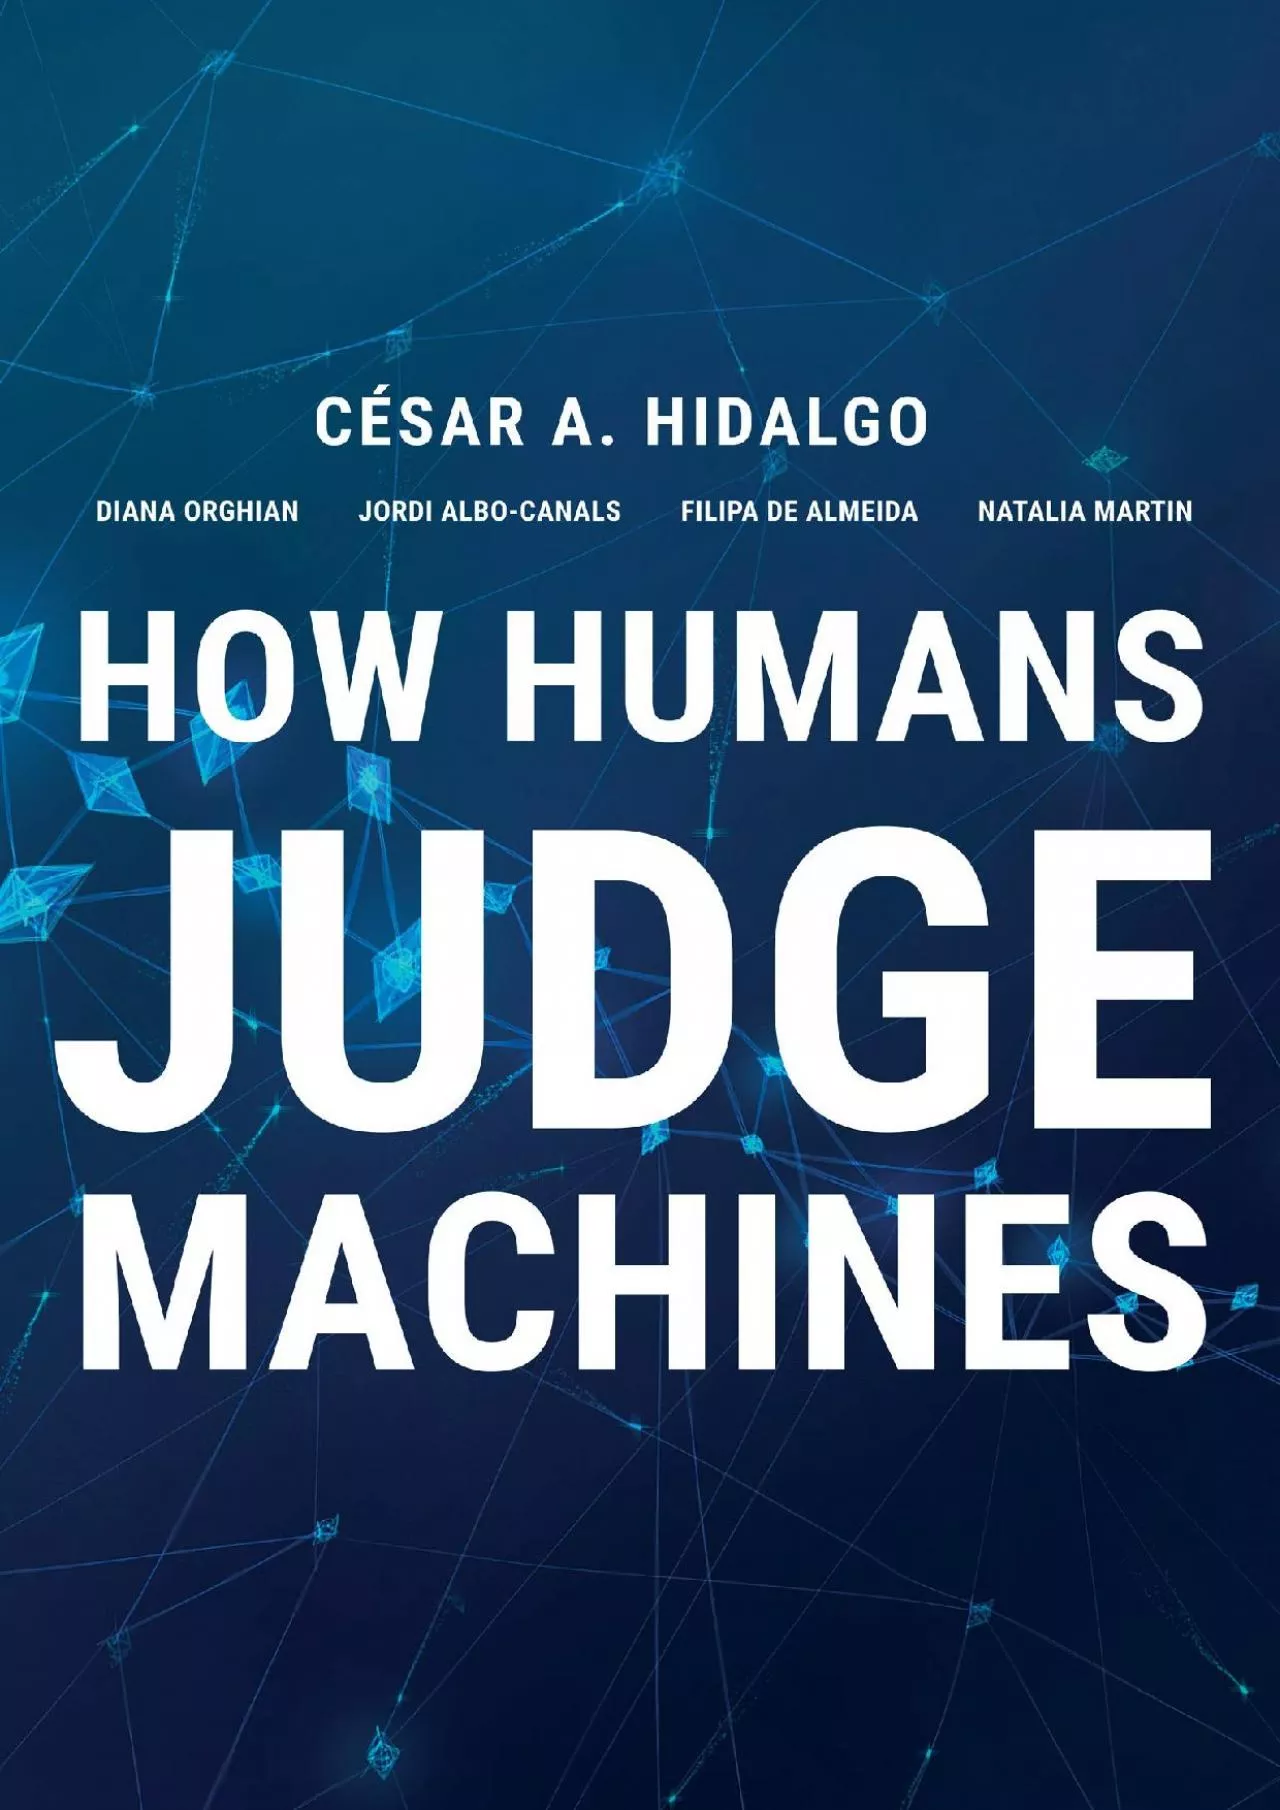 (BOOK)-How Humans Judge Machines